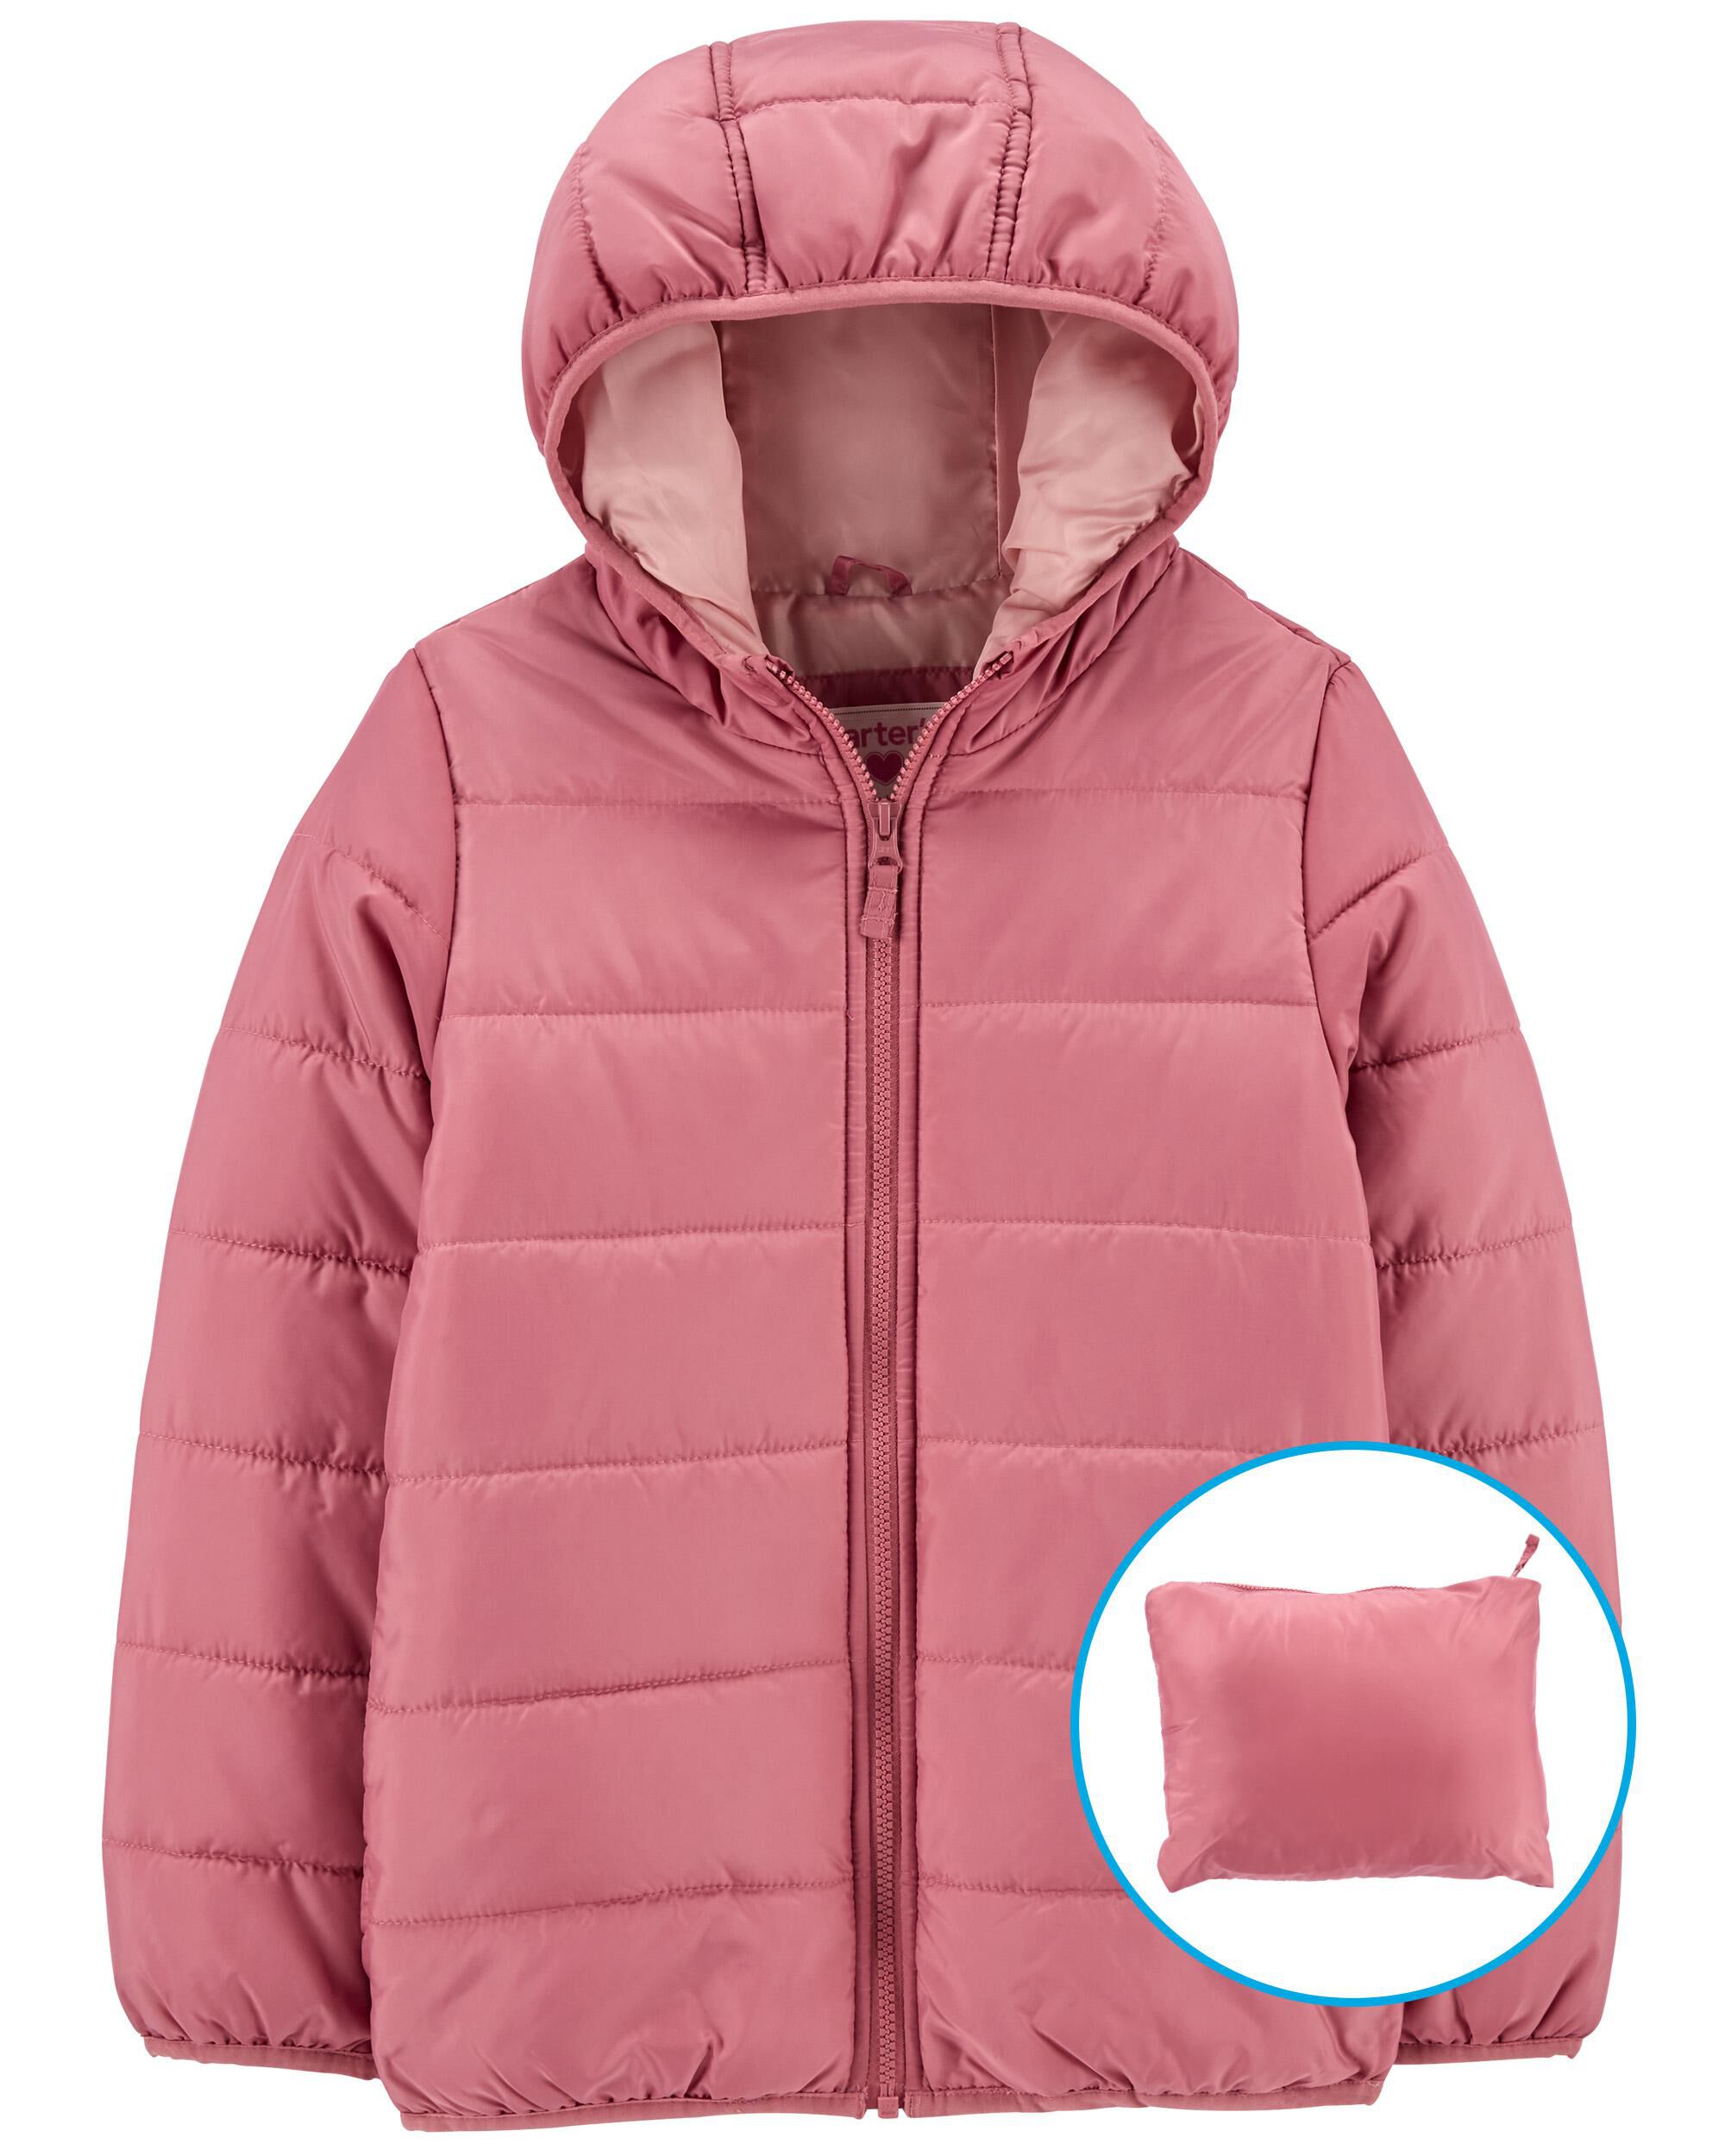 6X, Ditsy Floral Carter's Toddler Girls' Fleece Lined Puffer Jacket Coat 